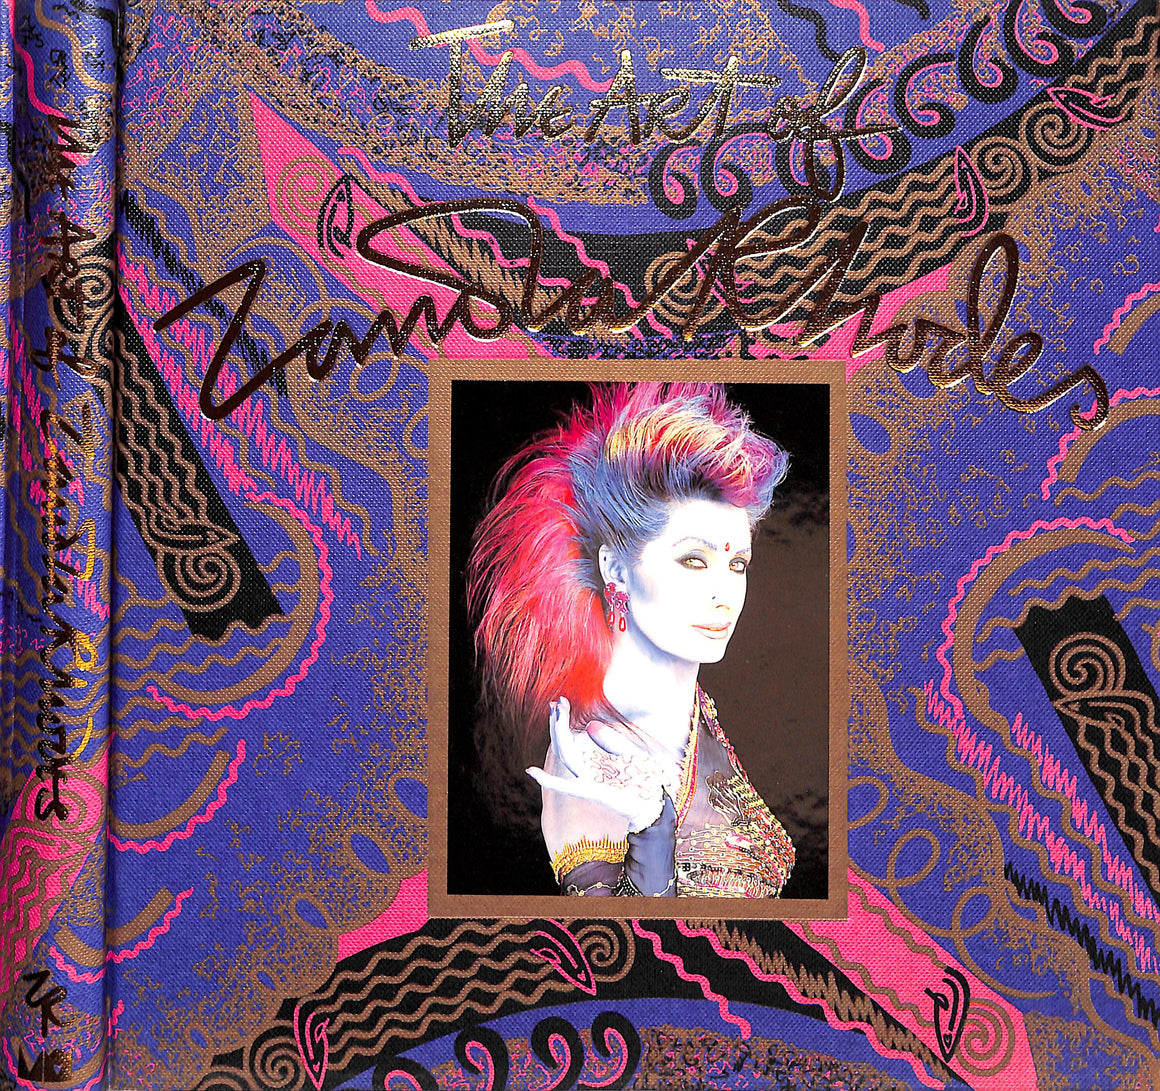 "The Art of Zandra Rhodes" 1994